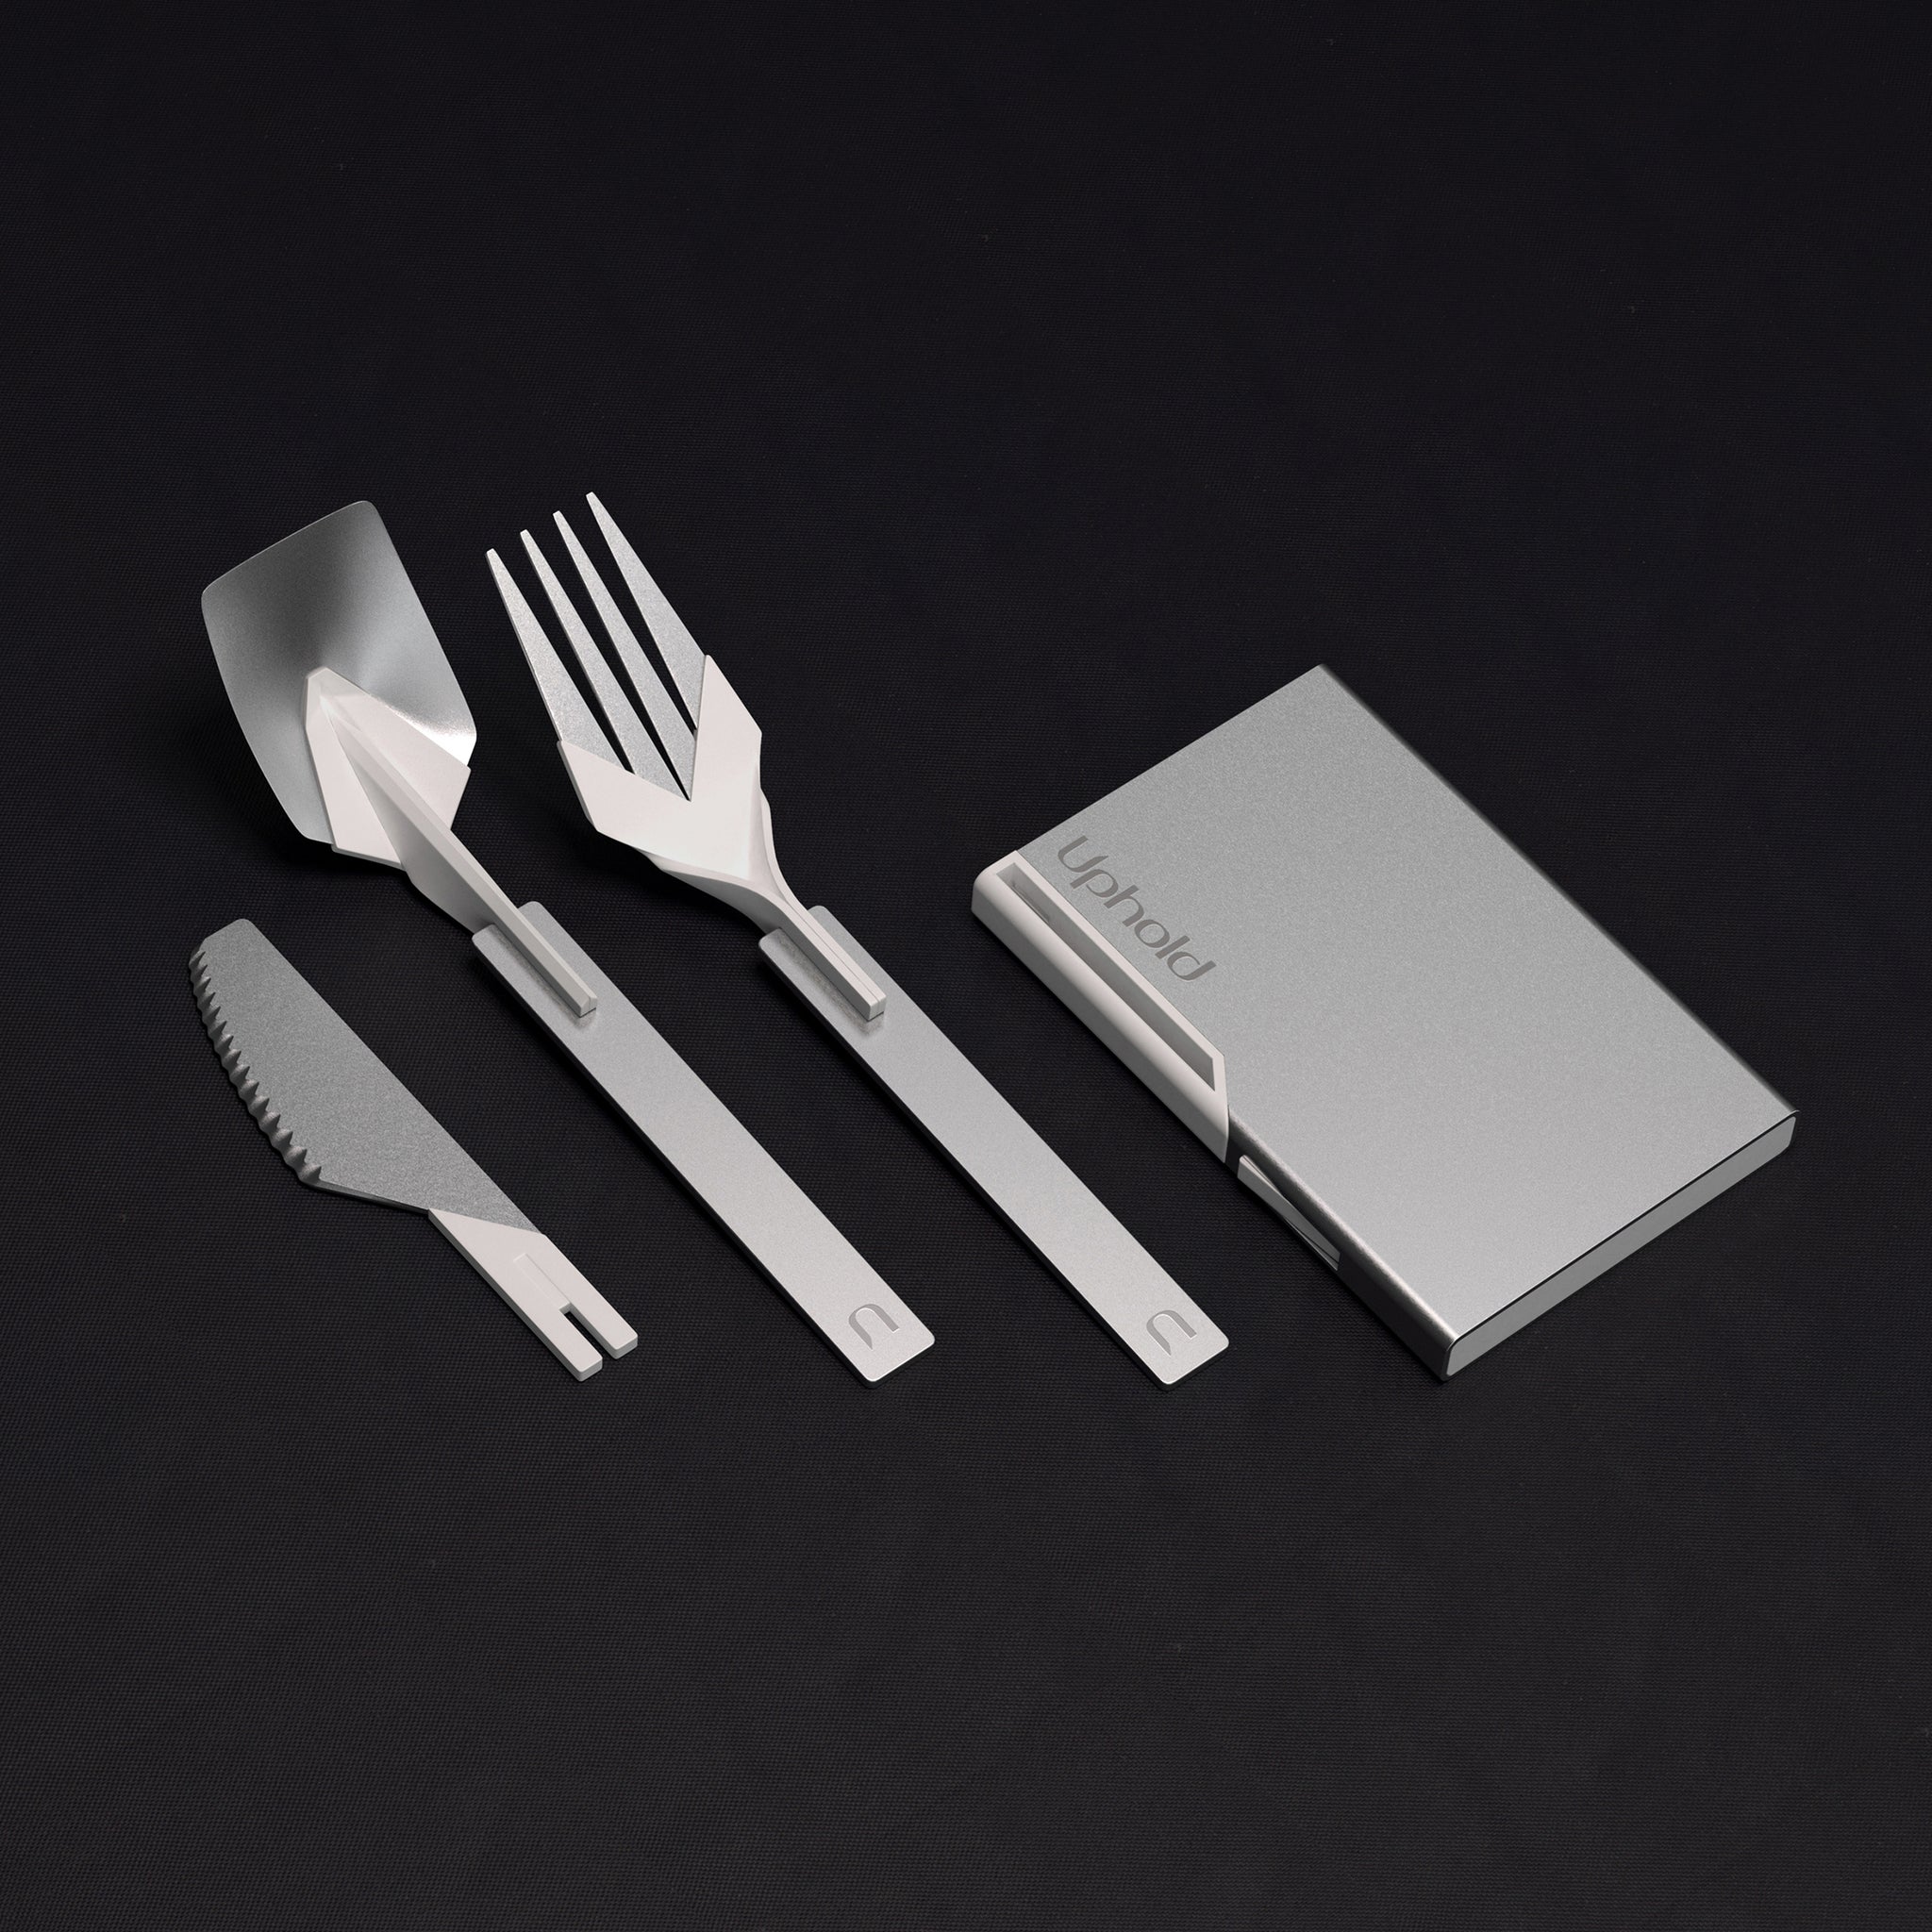 Uphold Cutlery Compact 隨行餐具 袖珍版 (Silver 白銀) [Folding Travel Cutlery/Collapsible Pocket Utensils 折疊旅行便攜餐具]